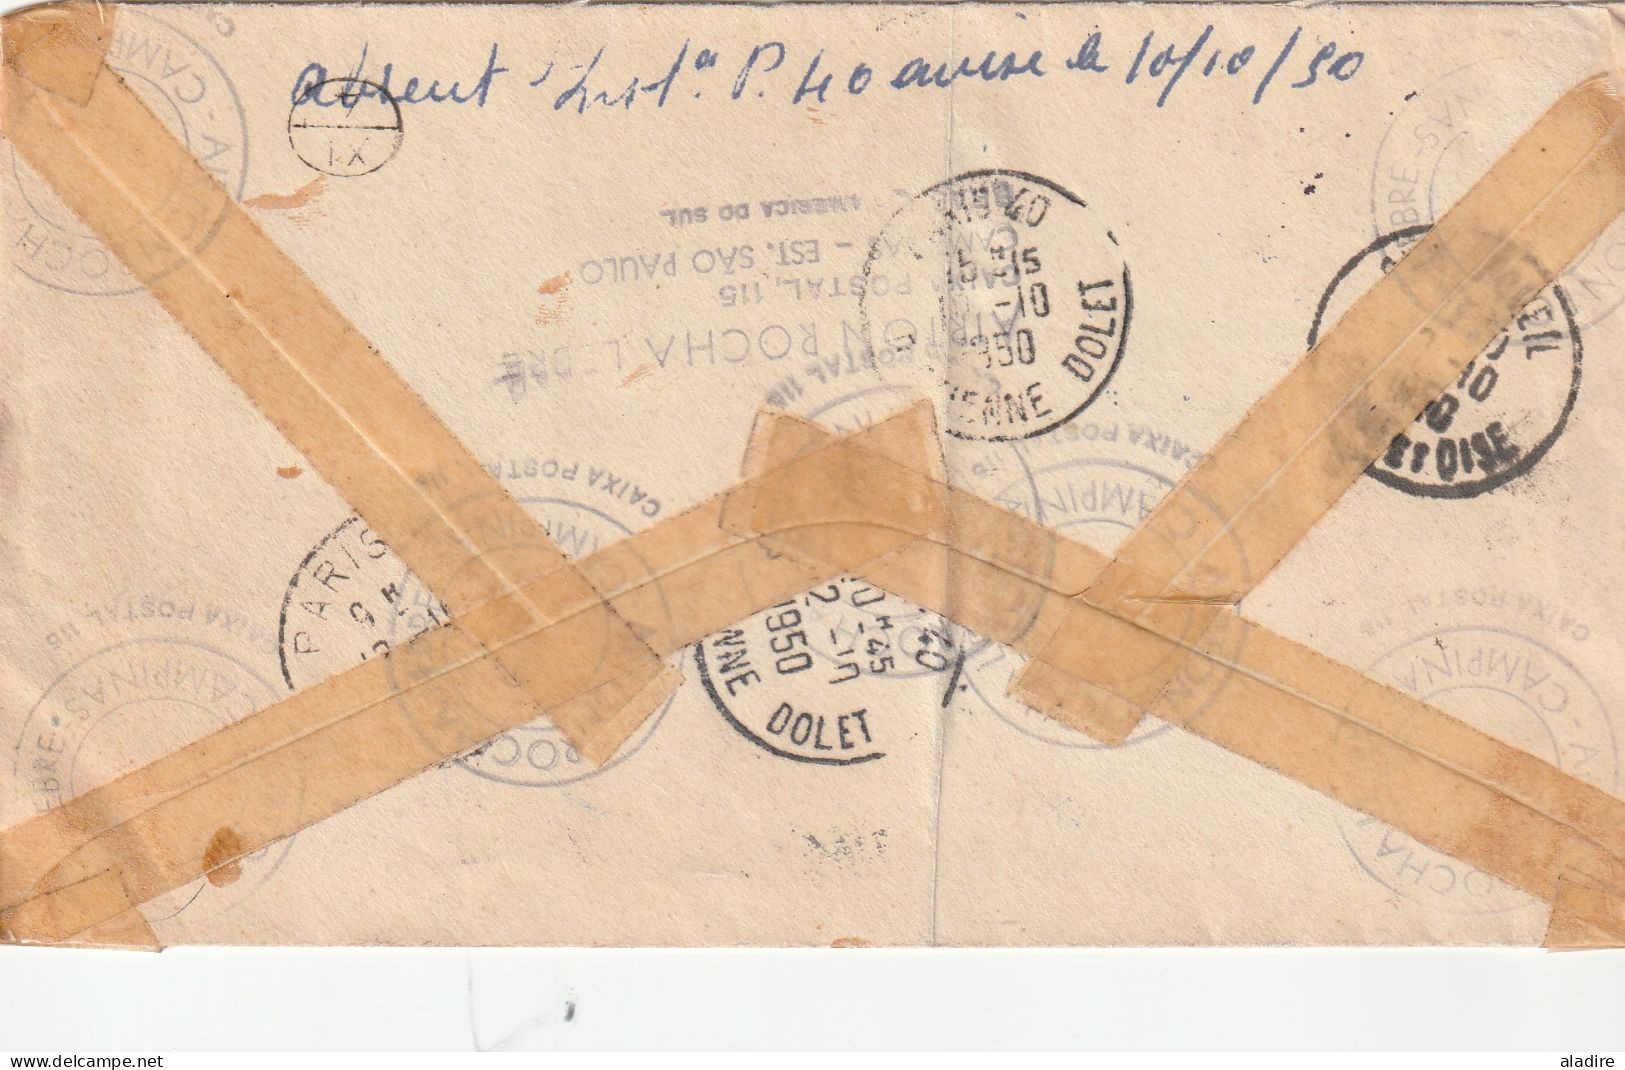 1928/1950 - POSTE AERIENNE - Collection de 19 enveloppes PAR AVION Via Aerea condor aeropostale pan air air france varig